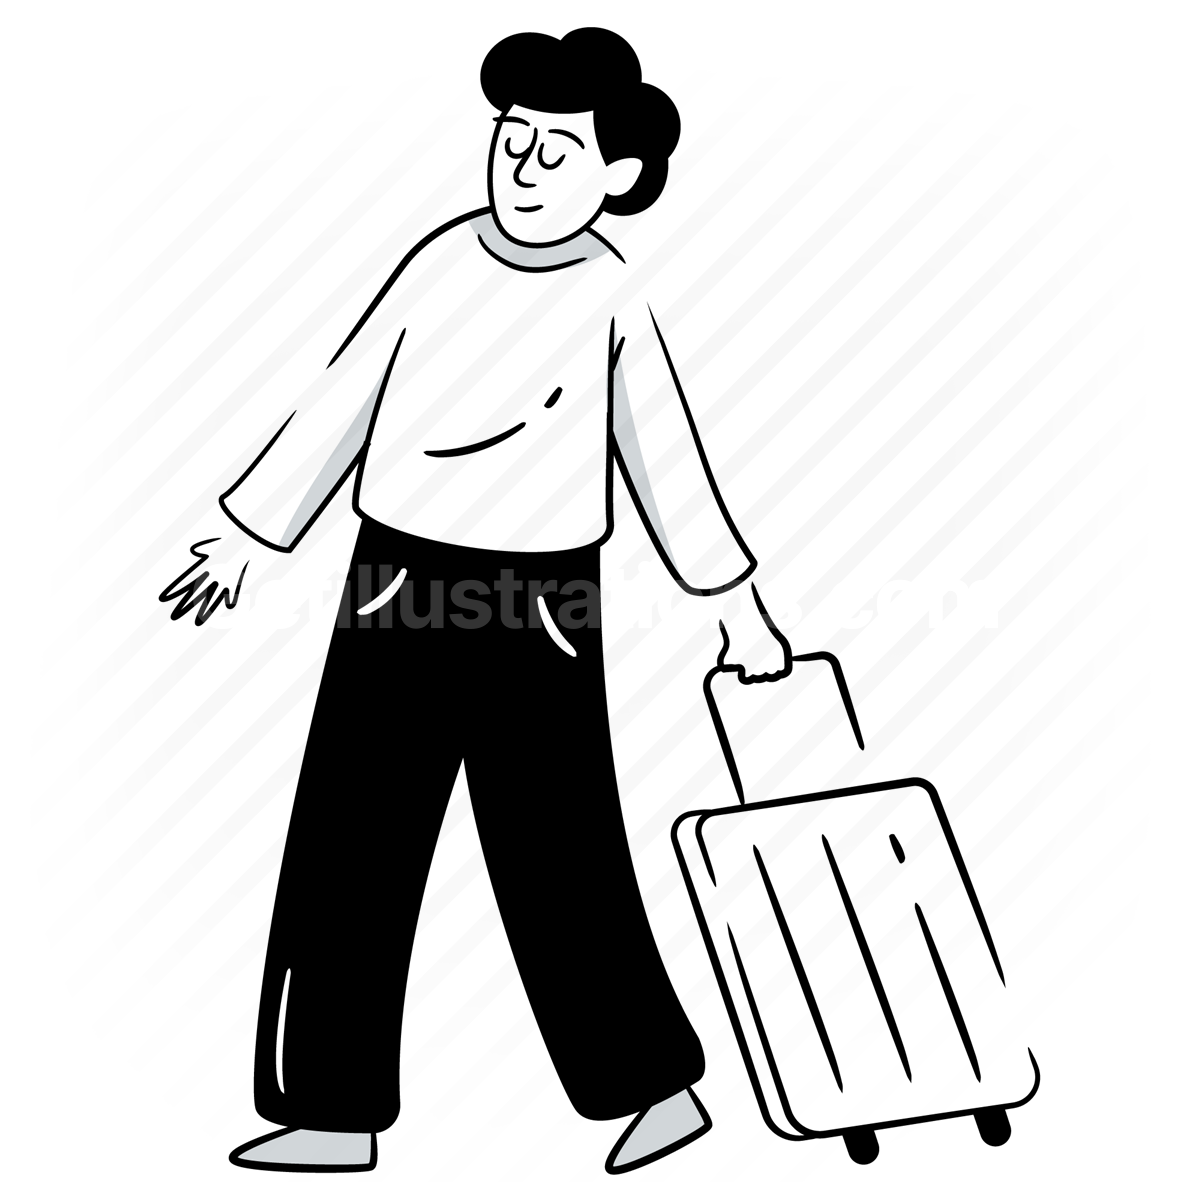 luggage, baggage, man, people, bag, suitcase, travelling, abroad